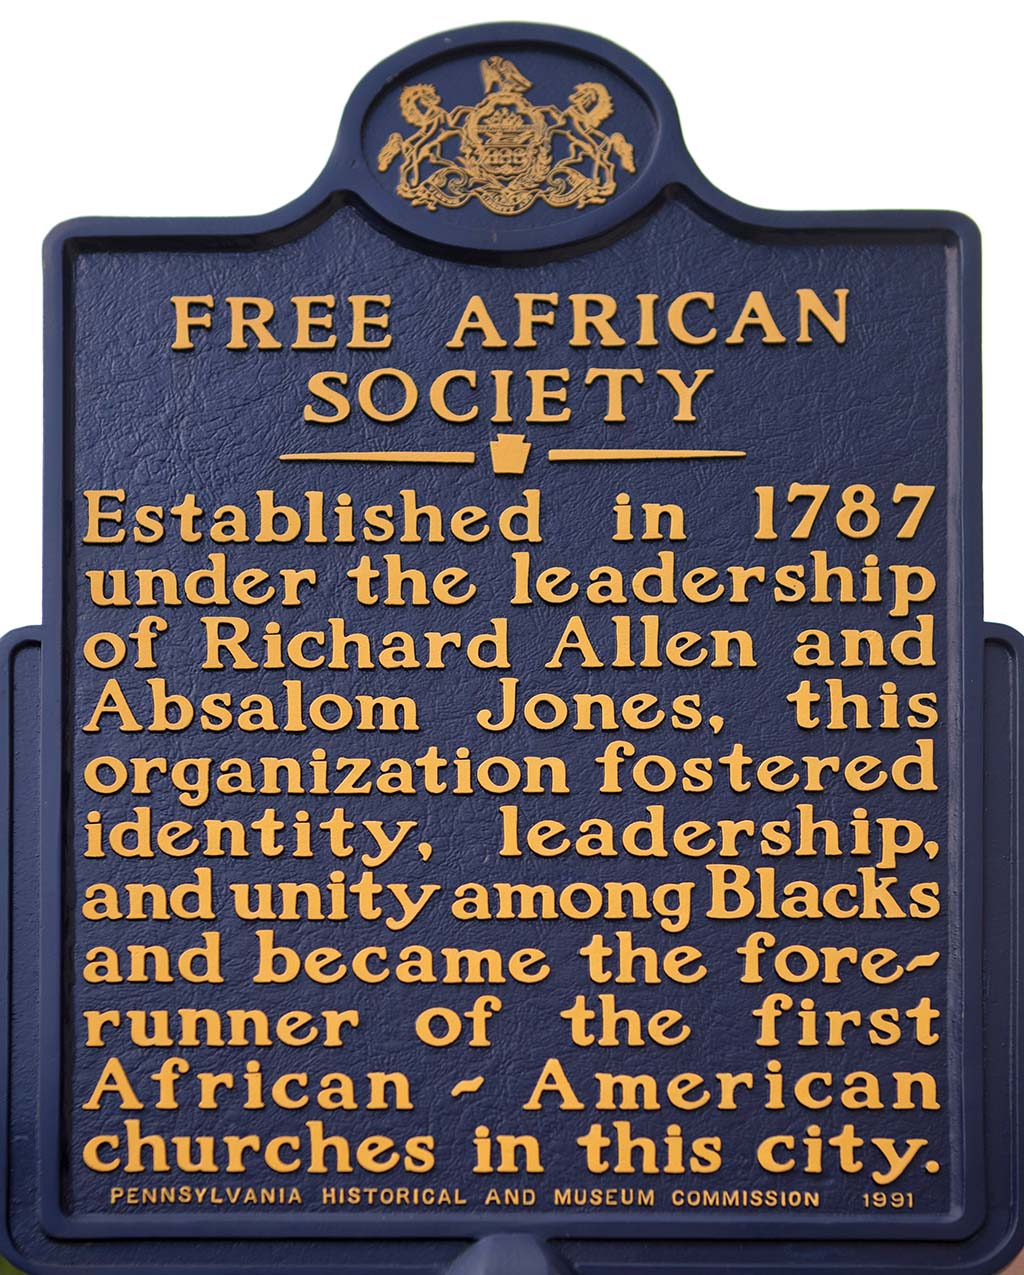 Free African Society Of Philadelphia 1787